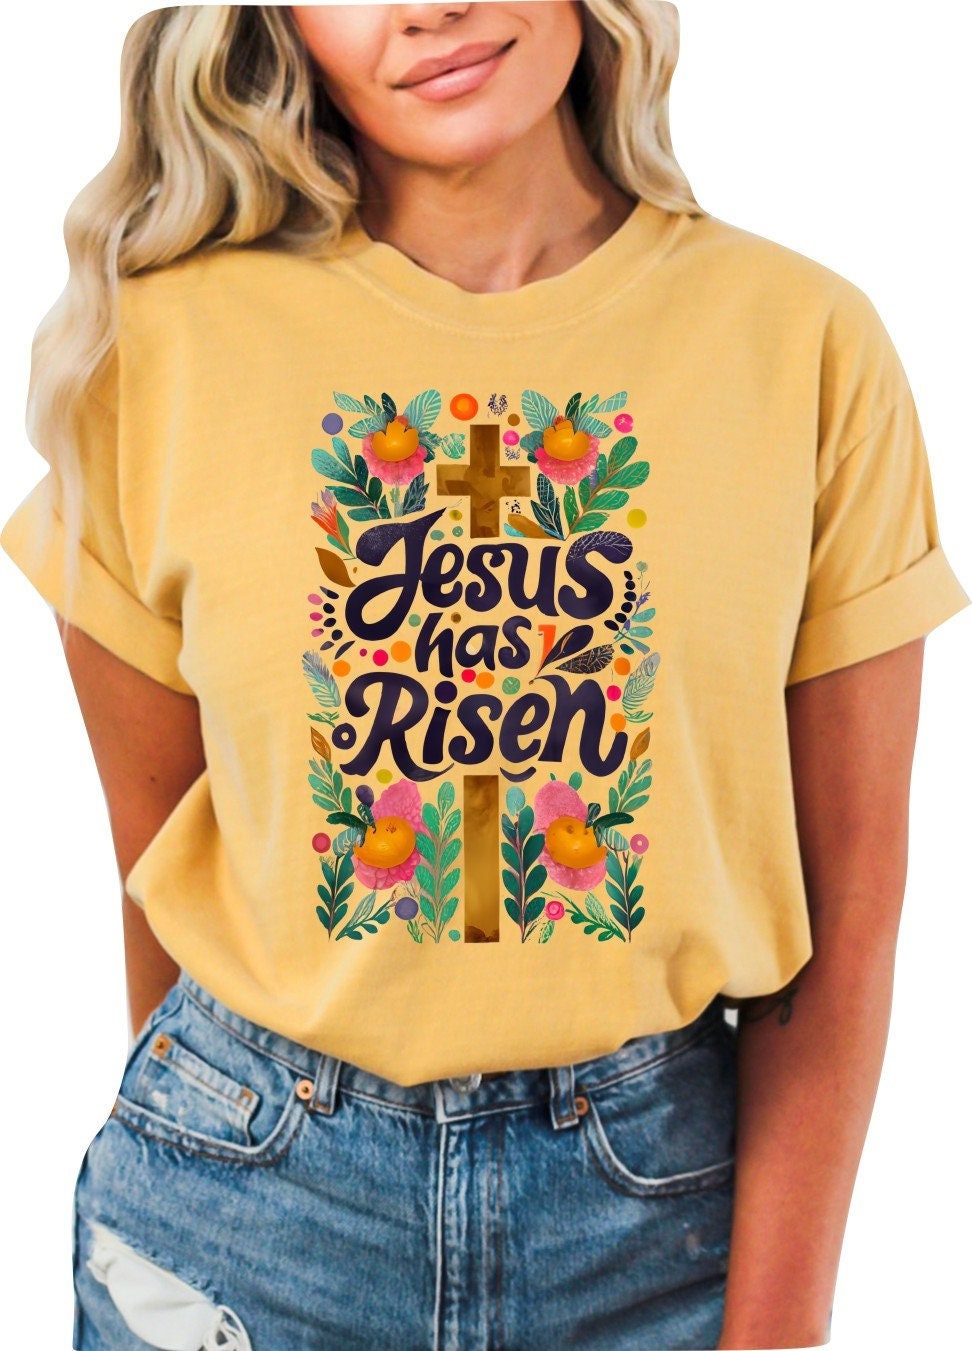 Christian Shirts Boho Christian Shirt Religious Tshirt Christian T Shirts Bible Verse Shirt Jesus Has Risen Floral Shirt